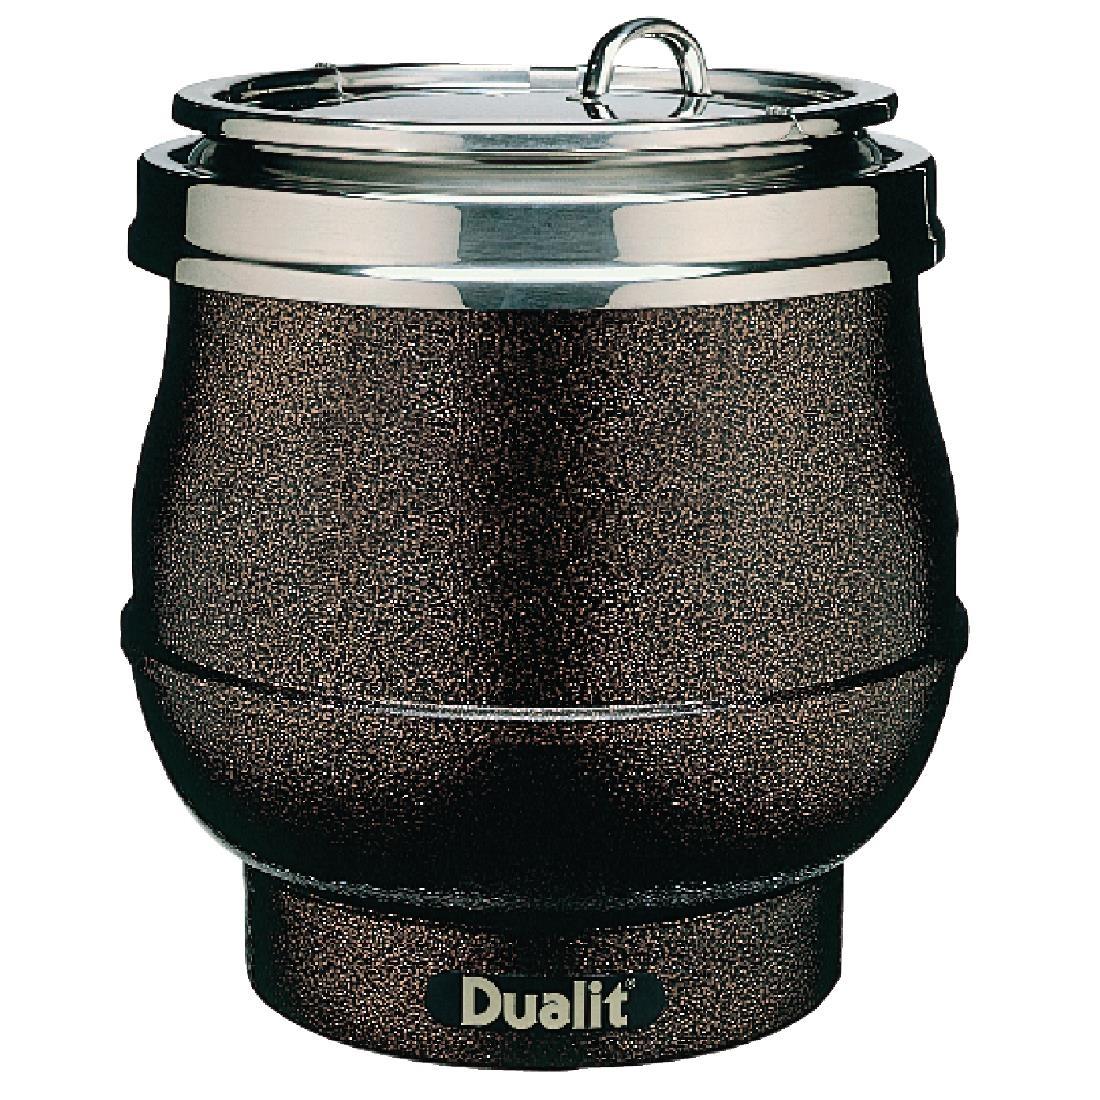 Dualit Hotpot Soup Kettle Rustic Brown 70007 - J466  - 1